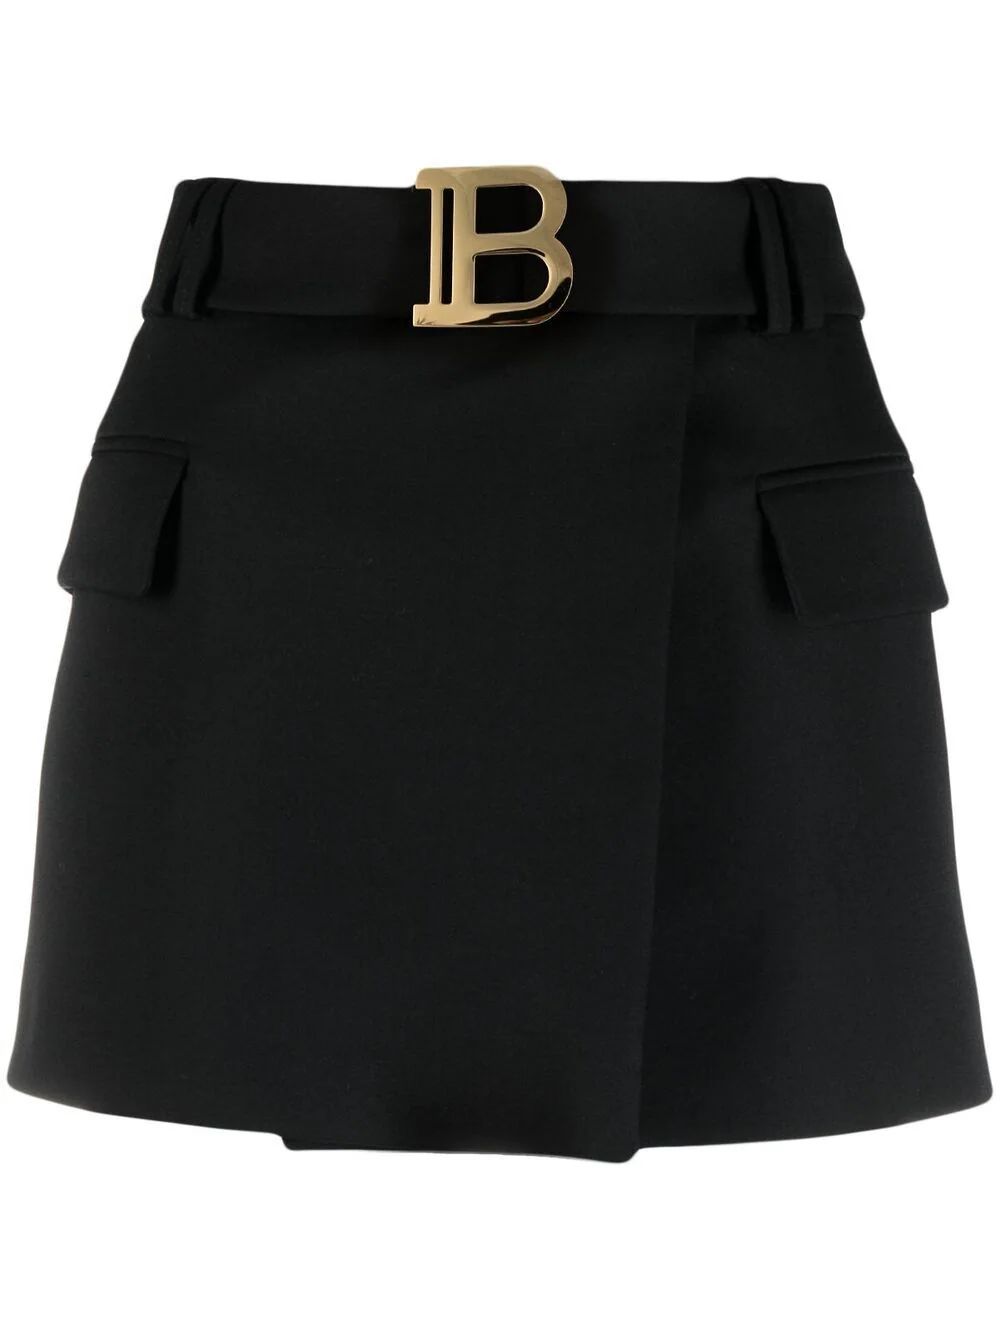 B-logo wrap skirt | Farfetch Global